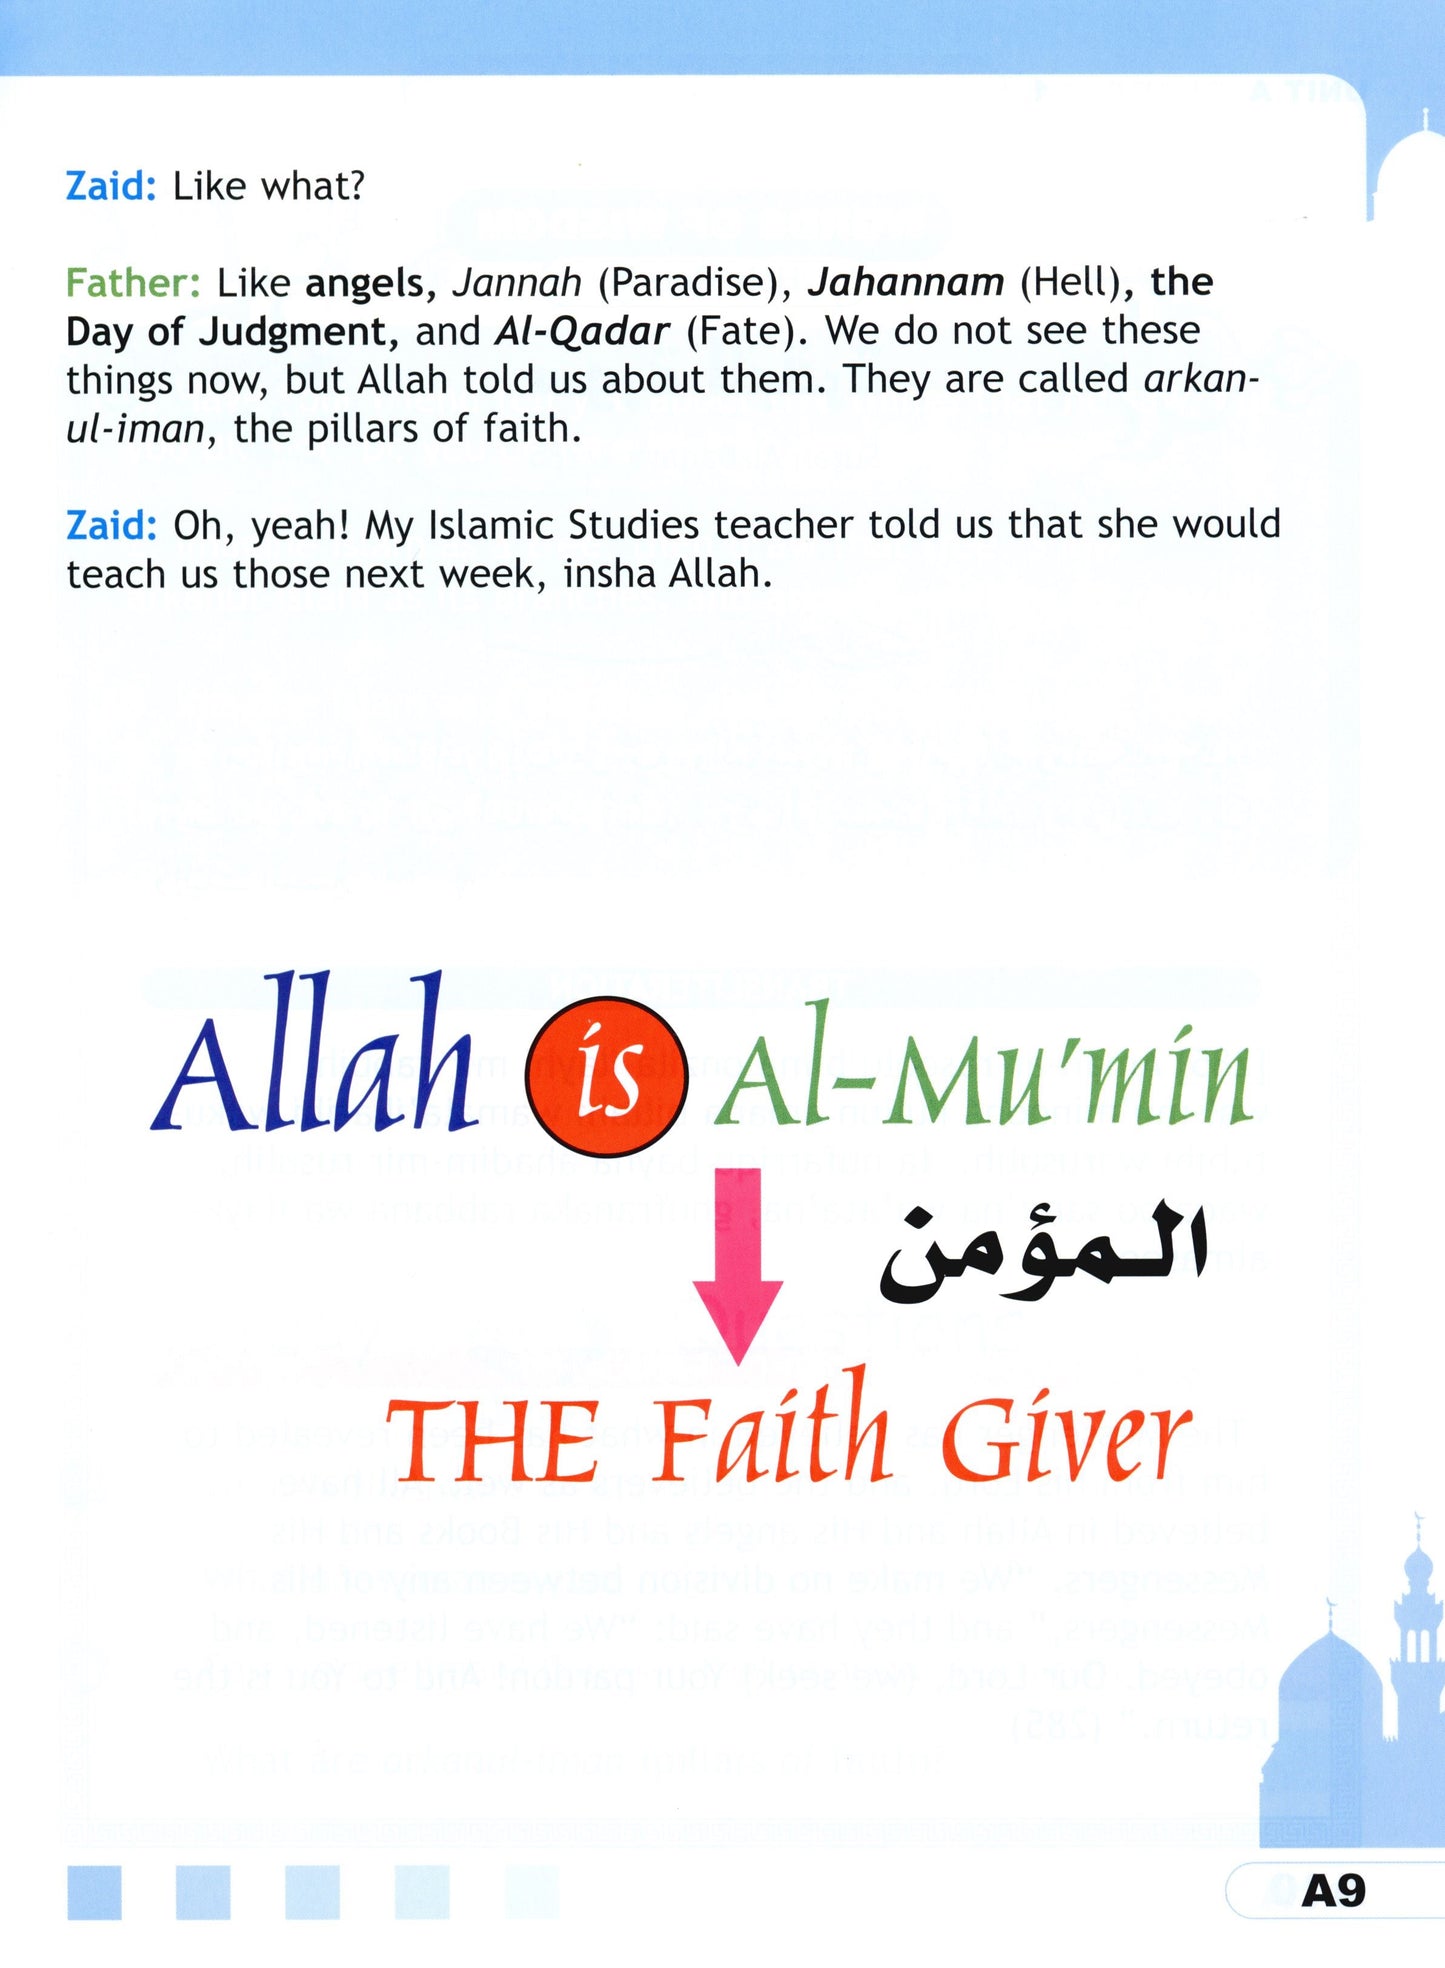 I Love Islam Textbook Level 3 ( 3rd Grade )